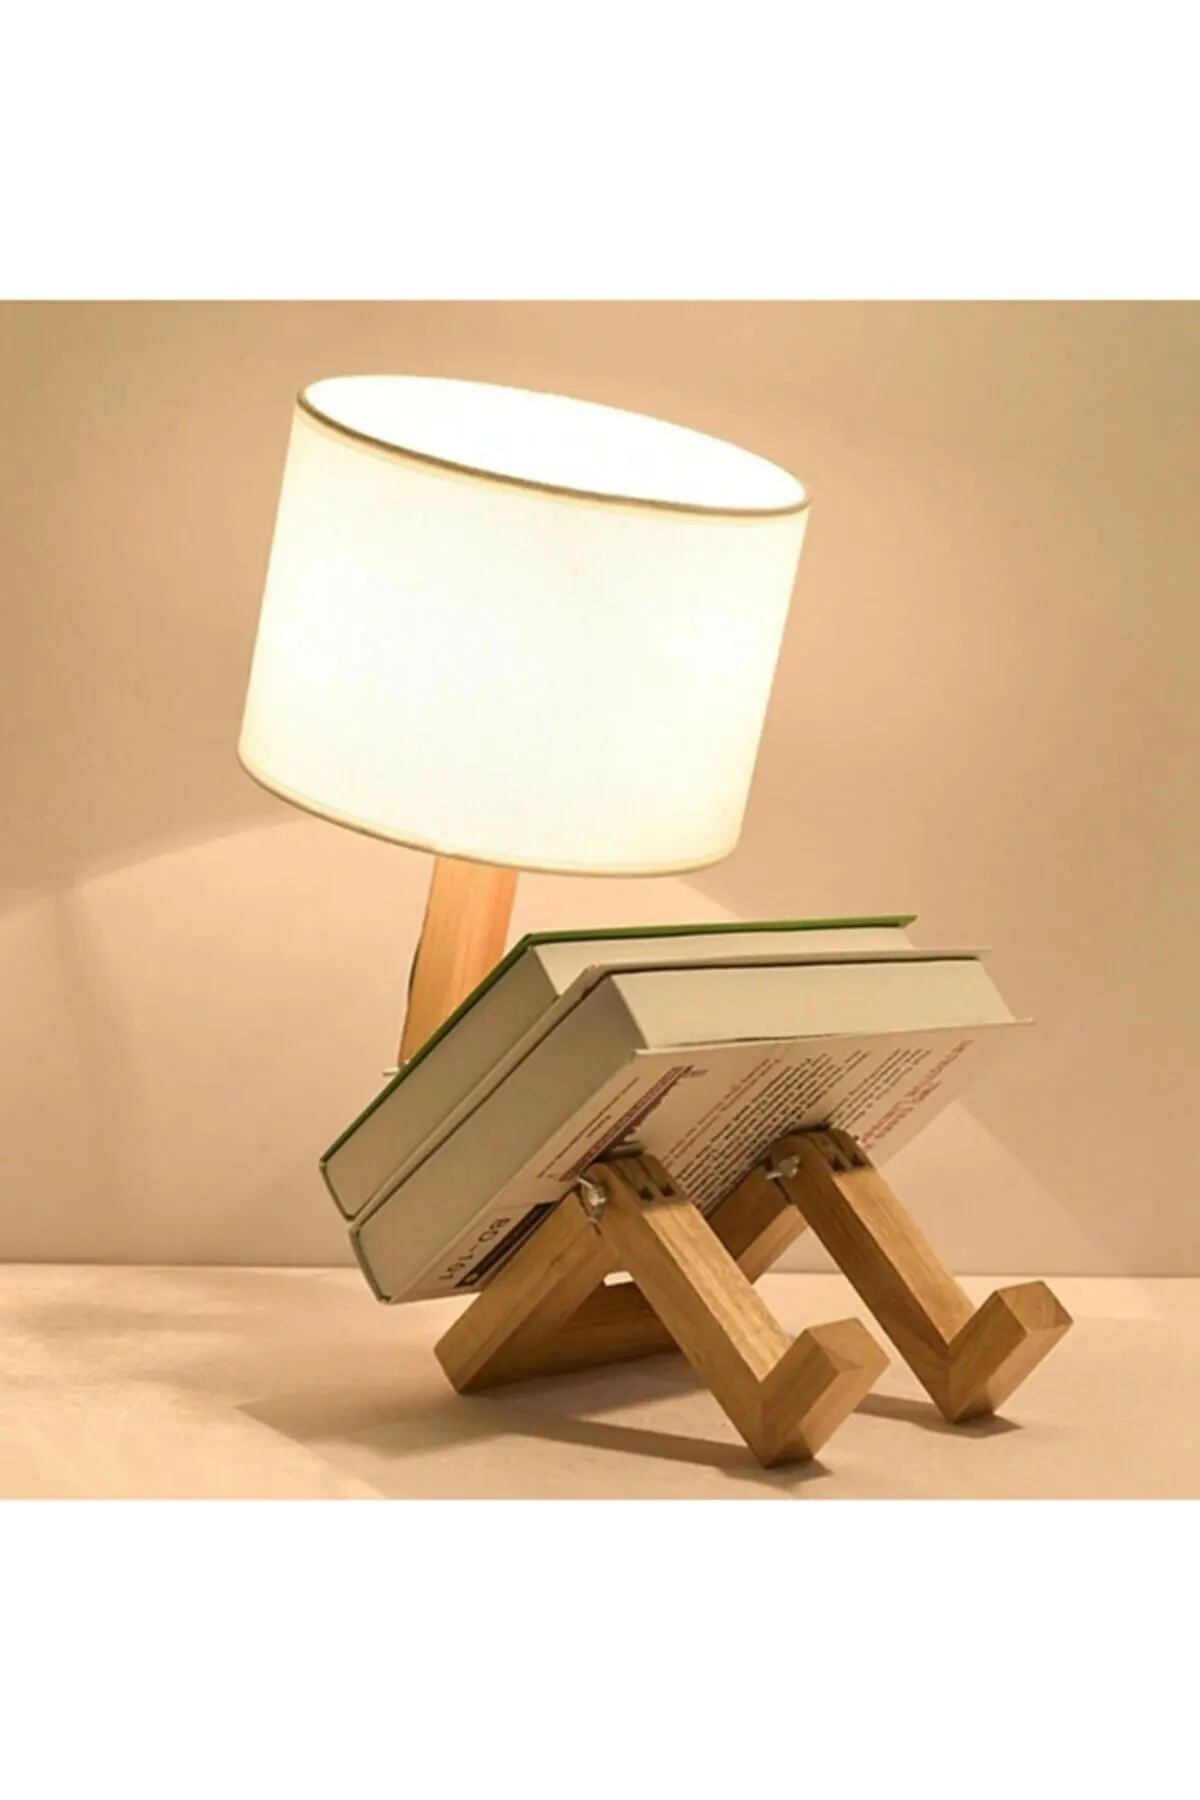 Techno Projex Wooden Man Table Lamp Scandinavian Model Lampshade Night Lamp with Bookshelf